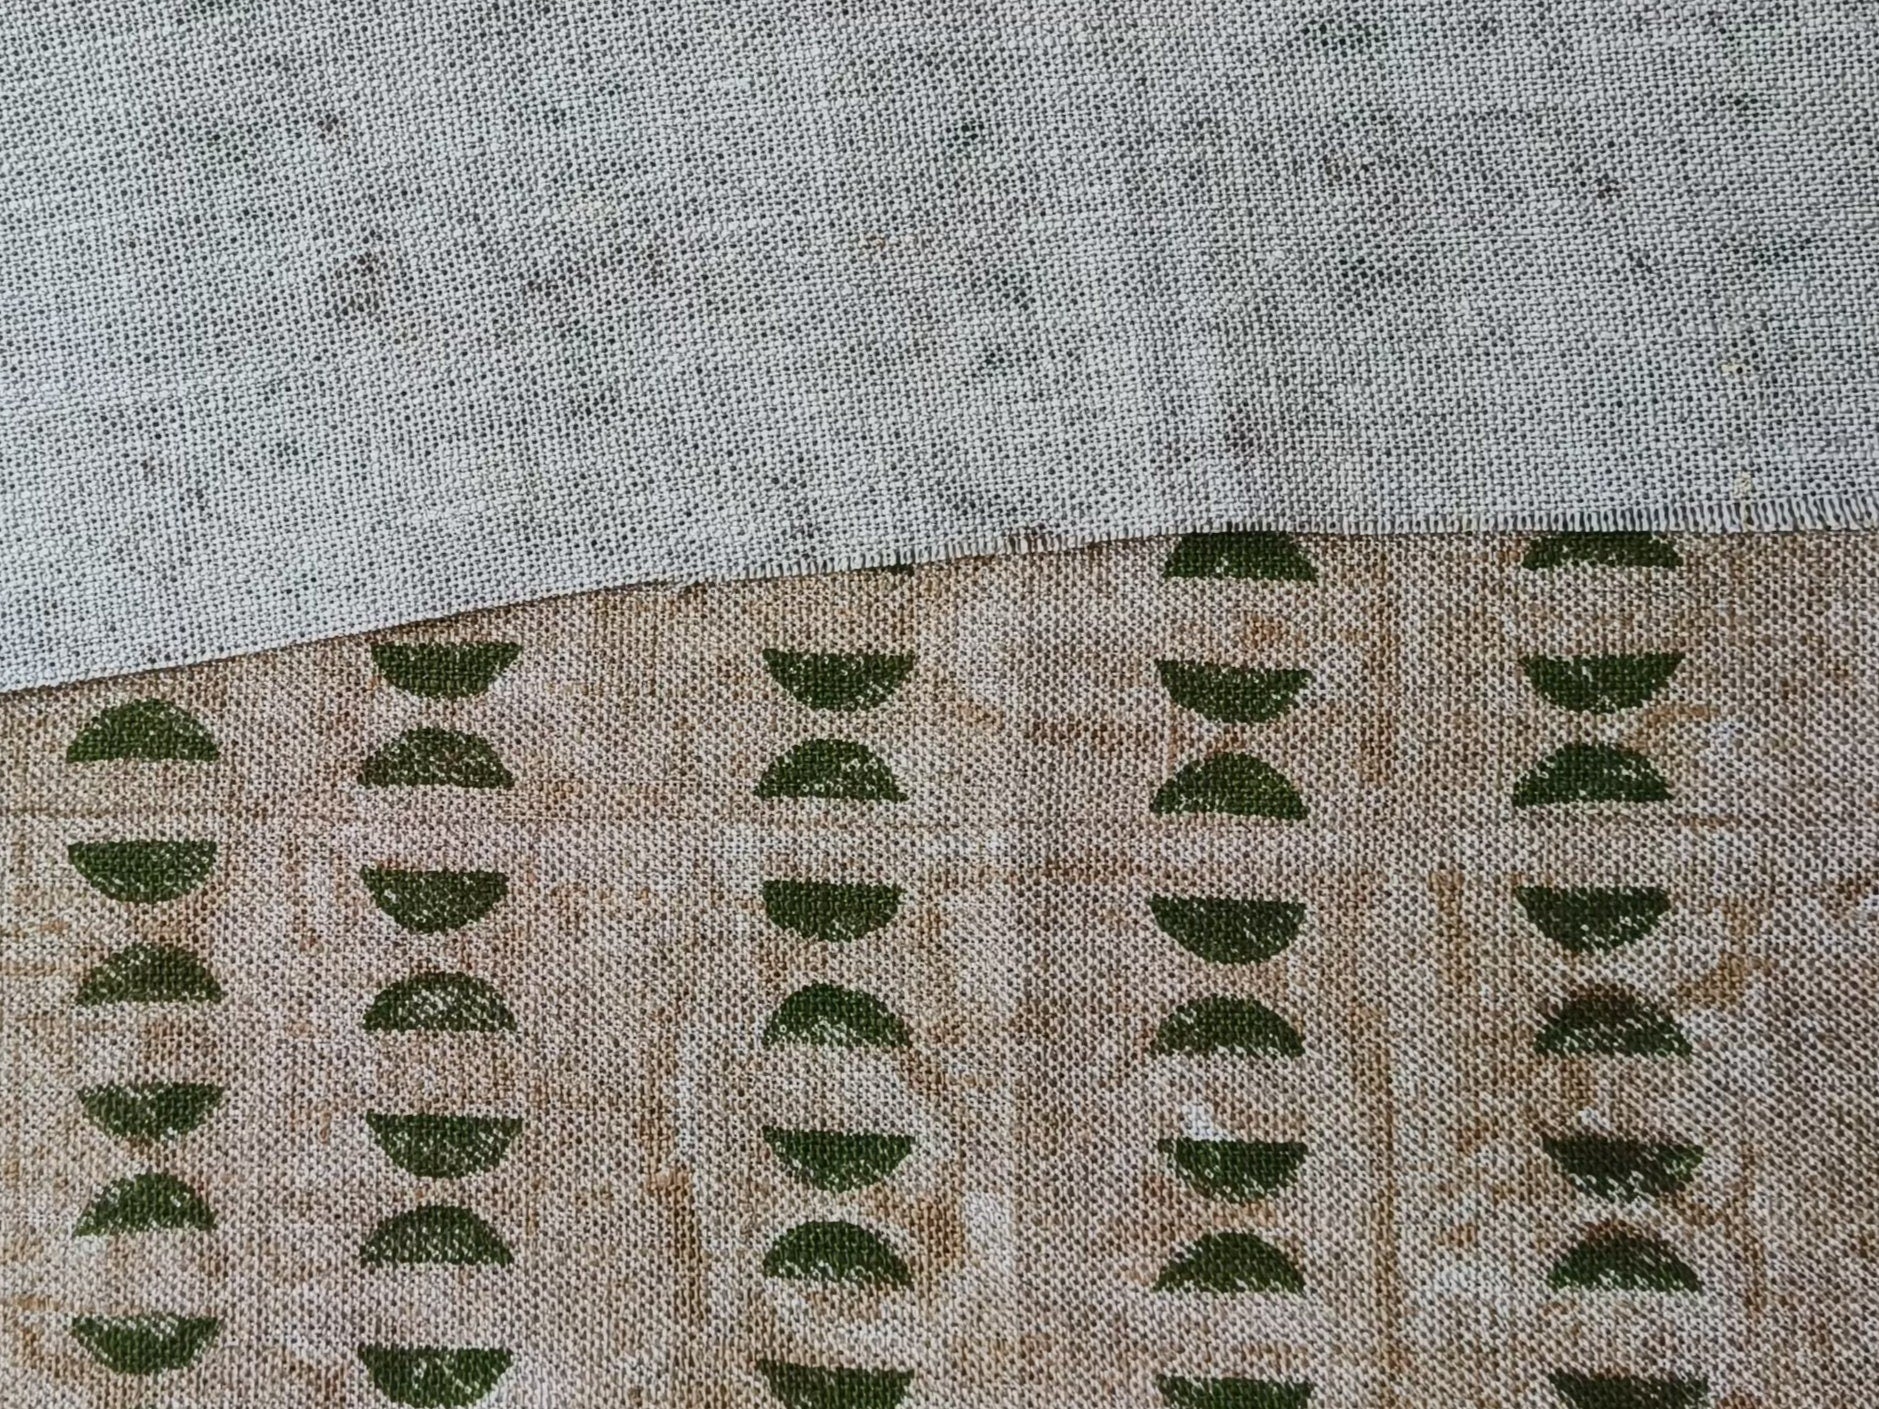 Block Print Linen Fabric, Namastae  Block Print Crafting Fabric, Indian Hand Block Printed Linen Fabric, Floral Print Linen Textile, Linen Cloth By The Yard